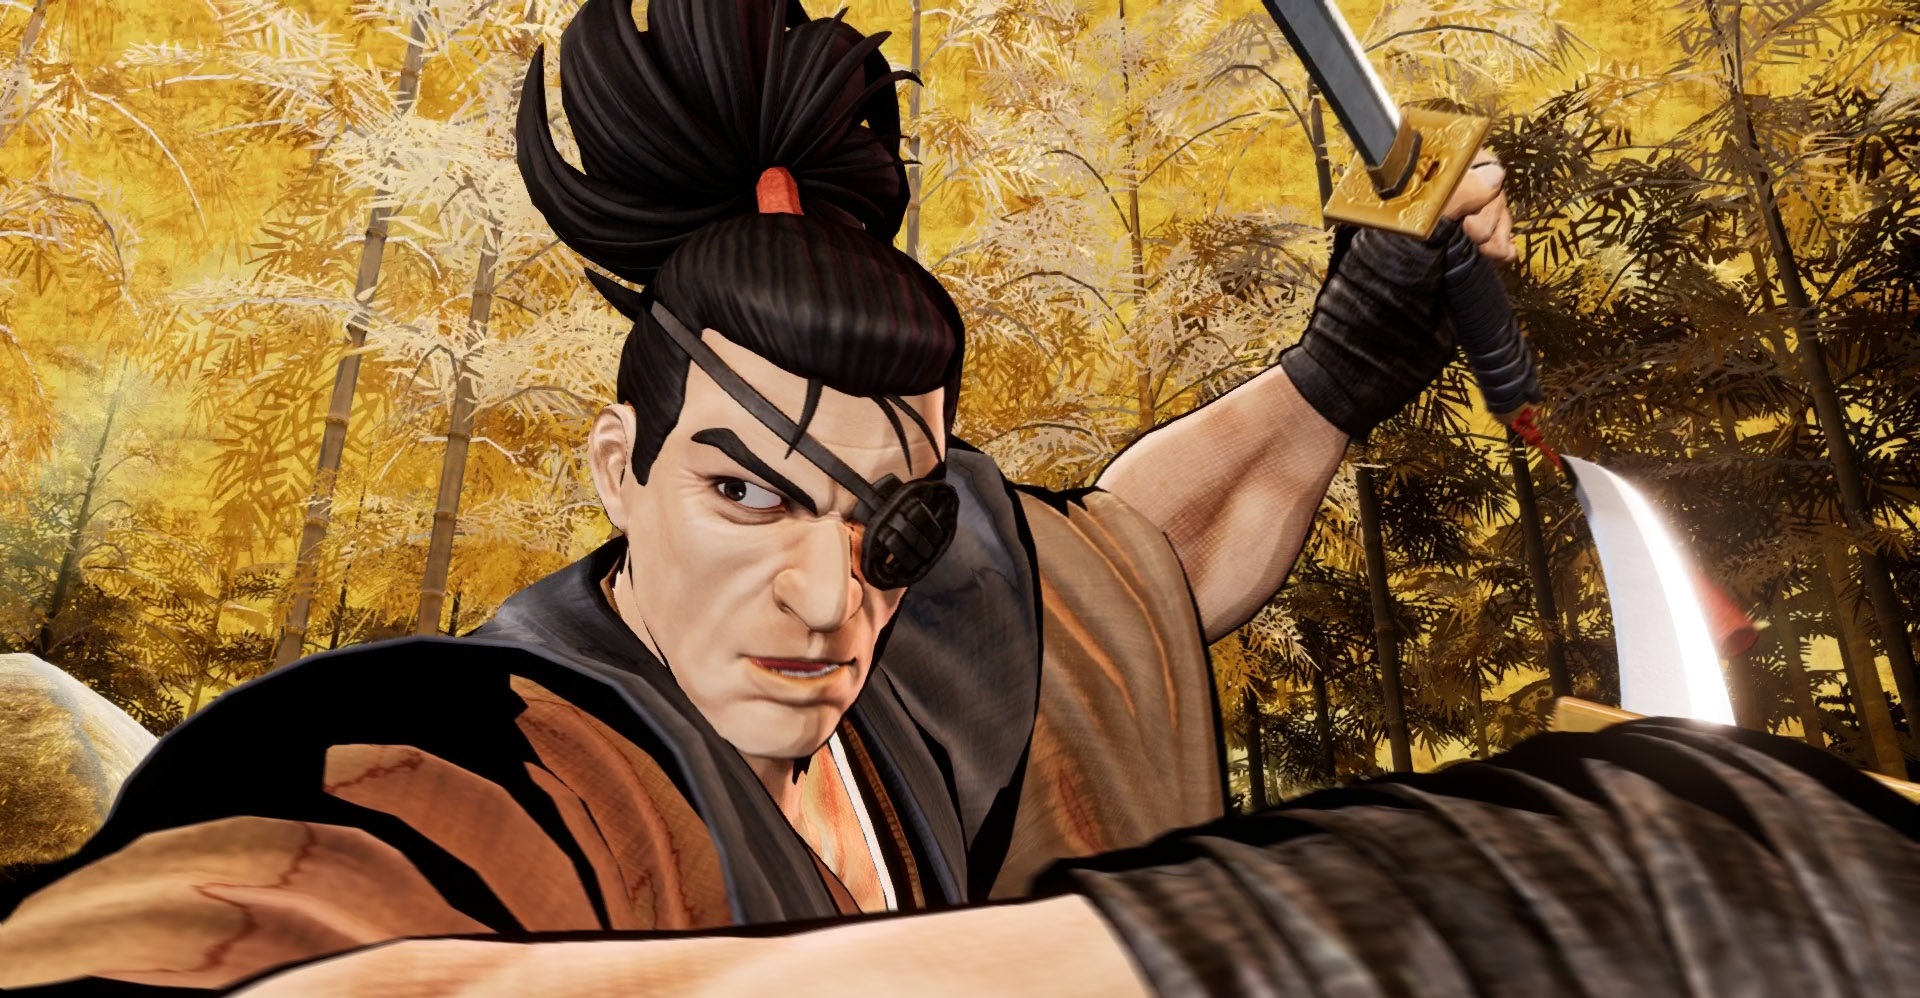 New Samurai Shodown Game Launches in Q2 2019